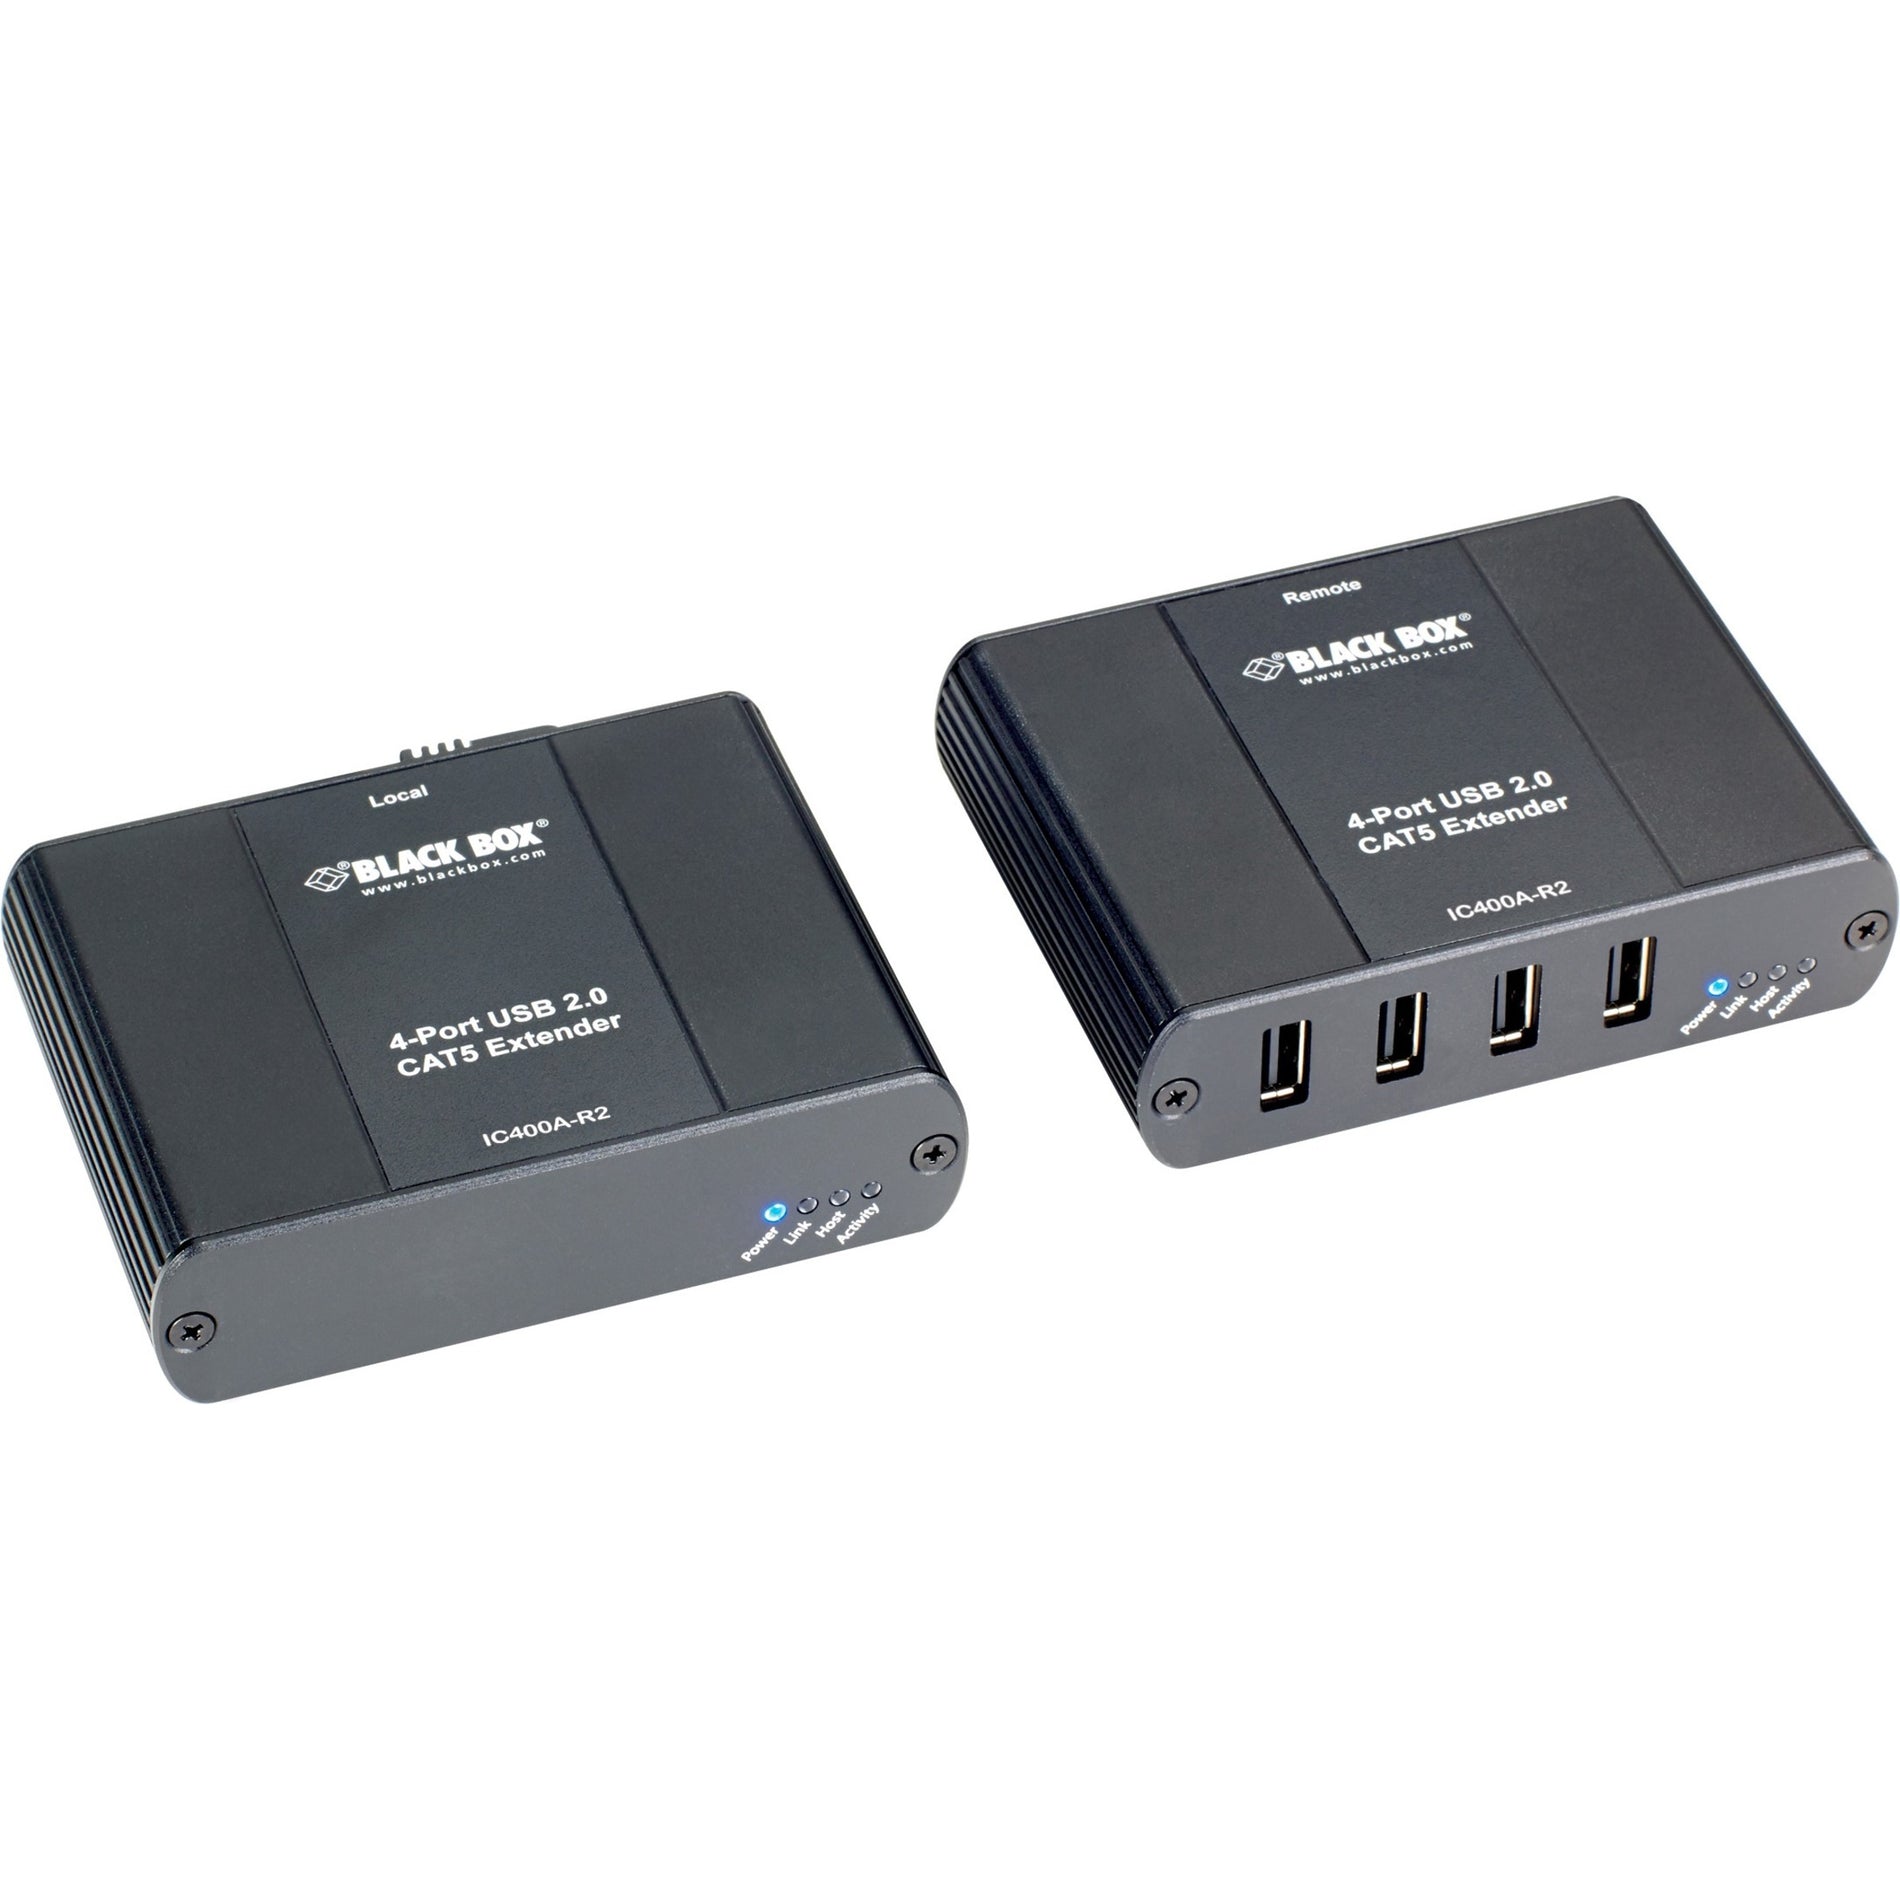 Black Box IC400A-R2 USB 2.0 Extender 4 Port CATx, 328.08 ft Range, 60 MB/s Transfer Rate